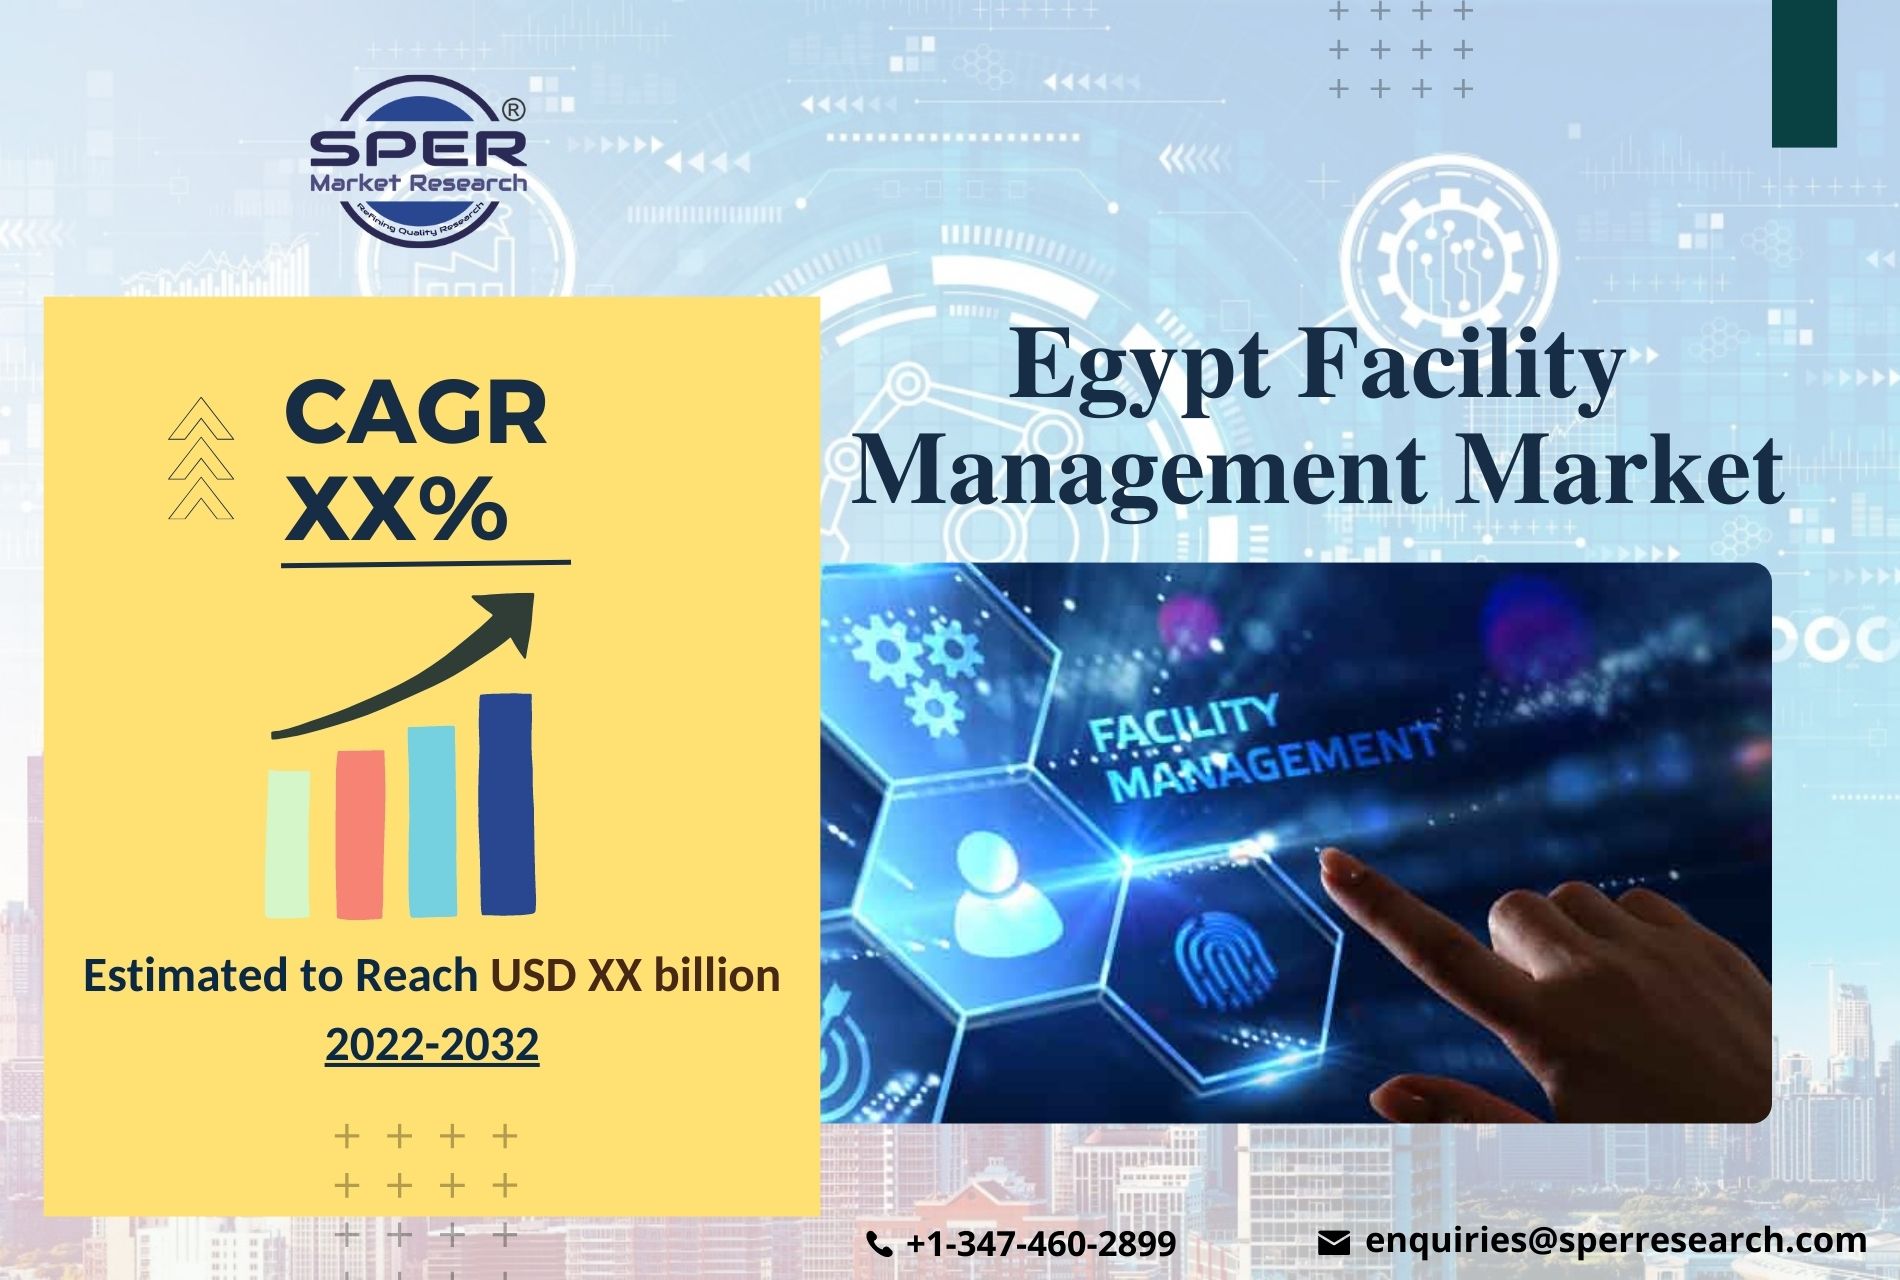 Egypt Facility Management Market